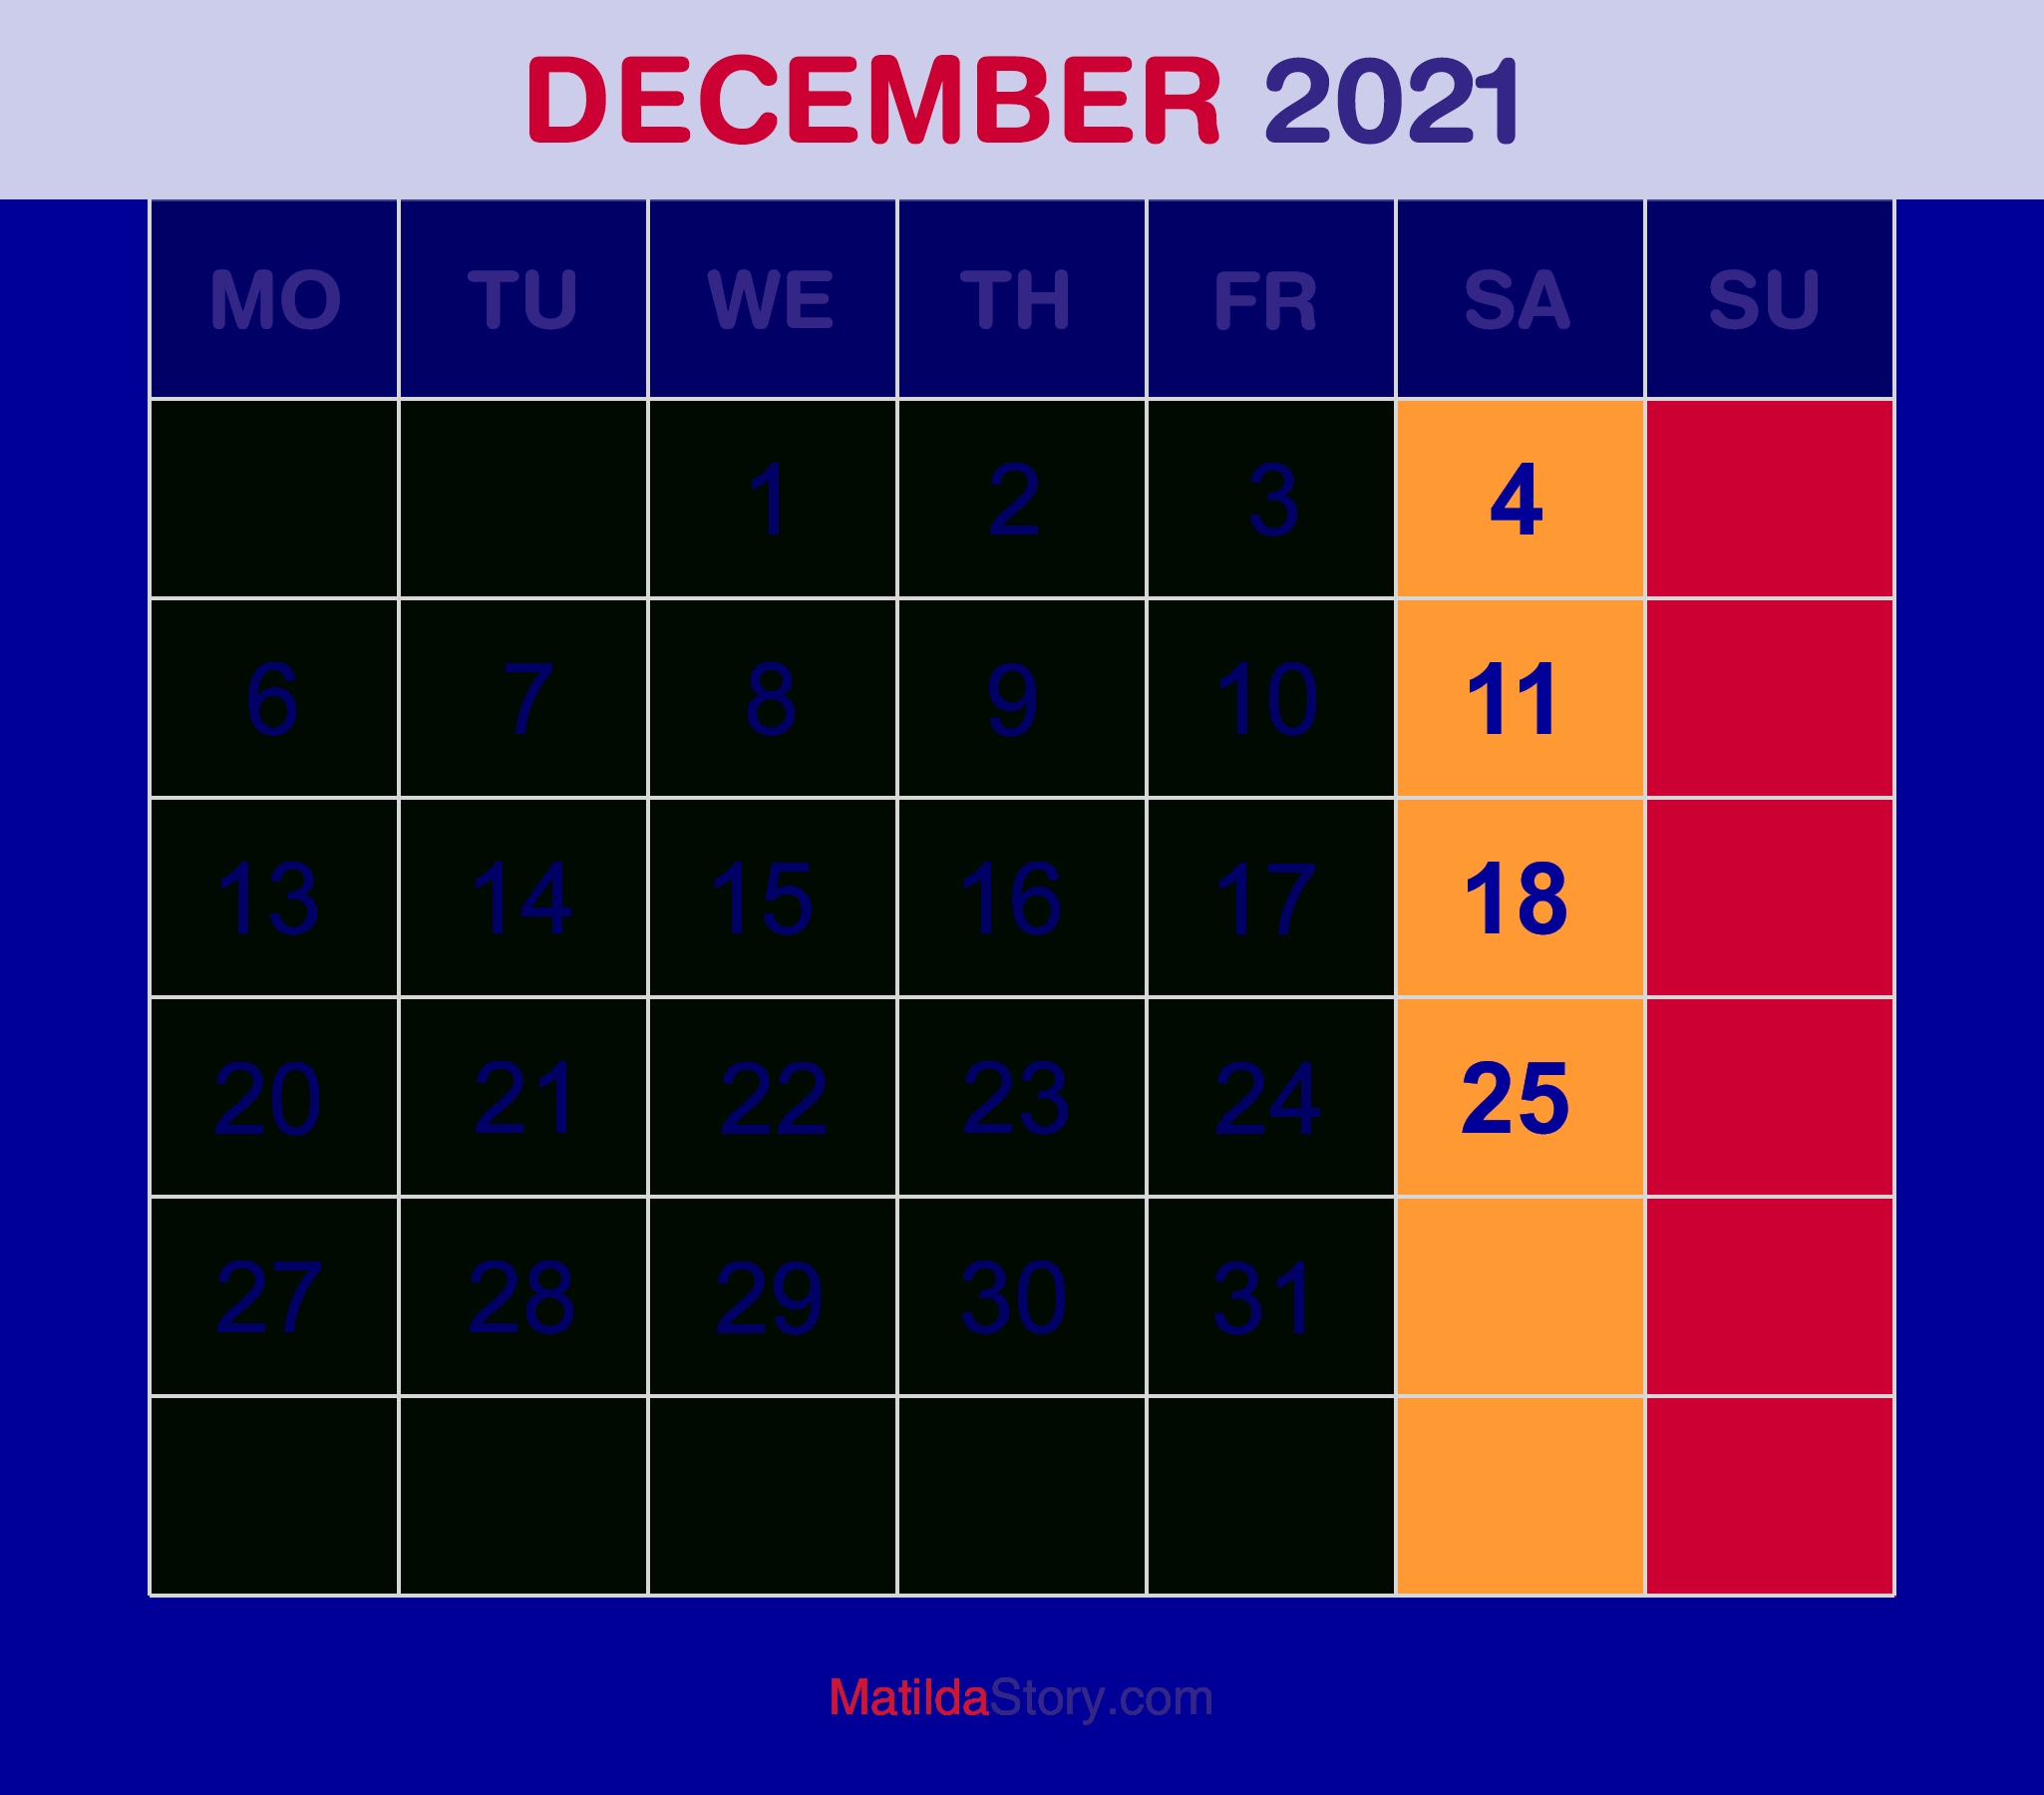 December 2021 Monthly Calendar, Monthly Planner, Printable Free - Monday Start - Matildastory Calendar For November And December 2021